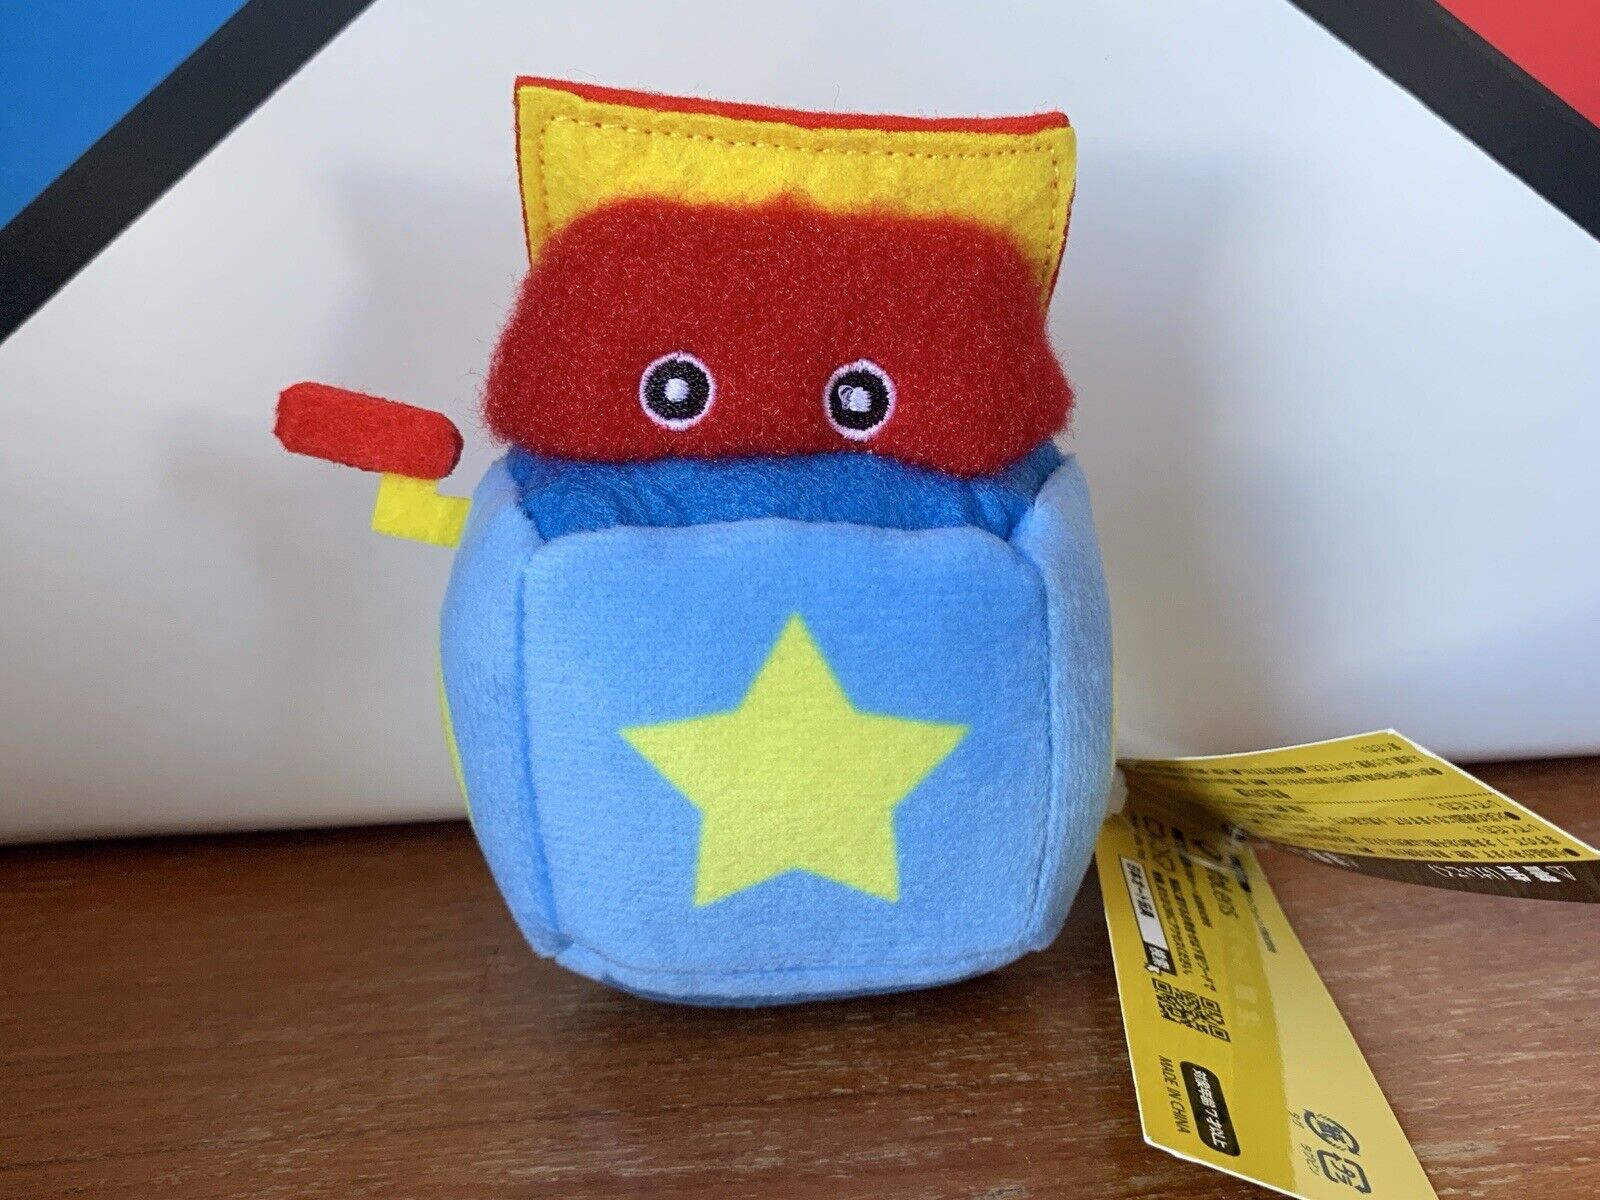 Poppy Playtime Boxy Boo Mini Plush Mascot 4” Ball Chain w/ Tag Infolens F/S